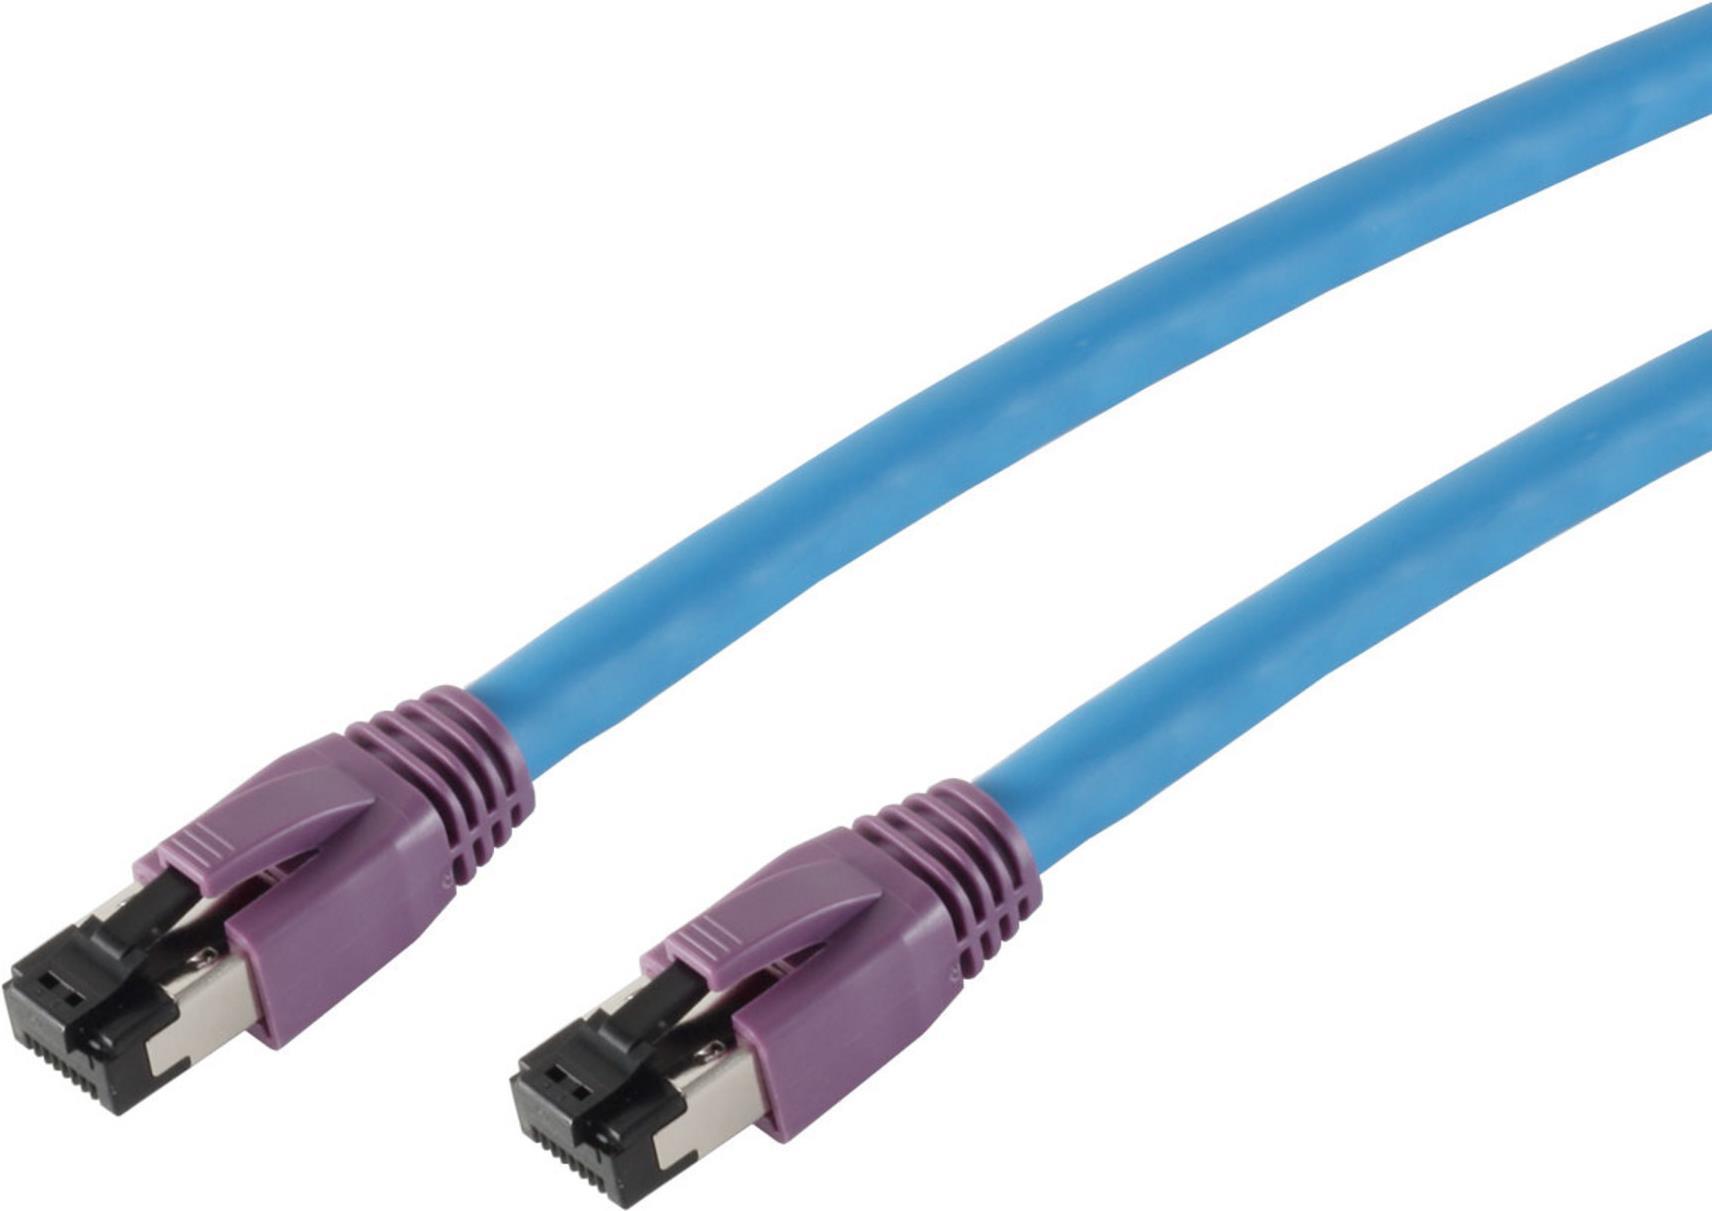 S-Conn 08-40051 S/FTP (S-STP) Blau 5m Cat8 Netzwerkkabel (08-40051)